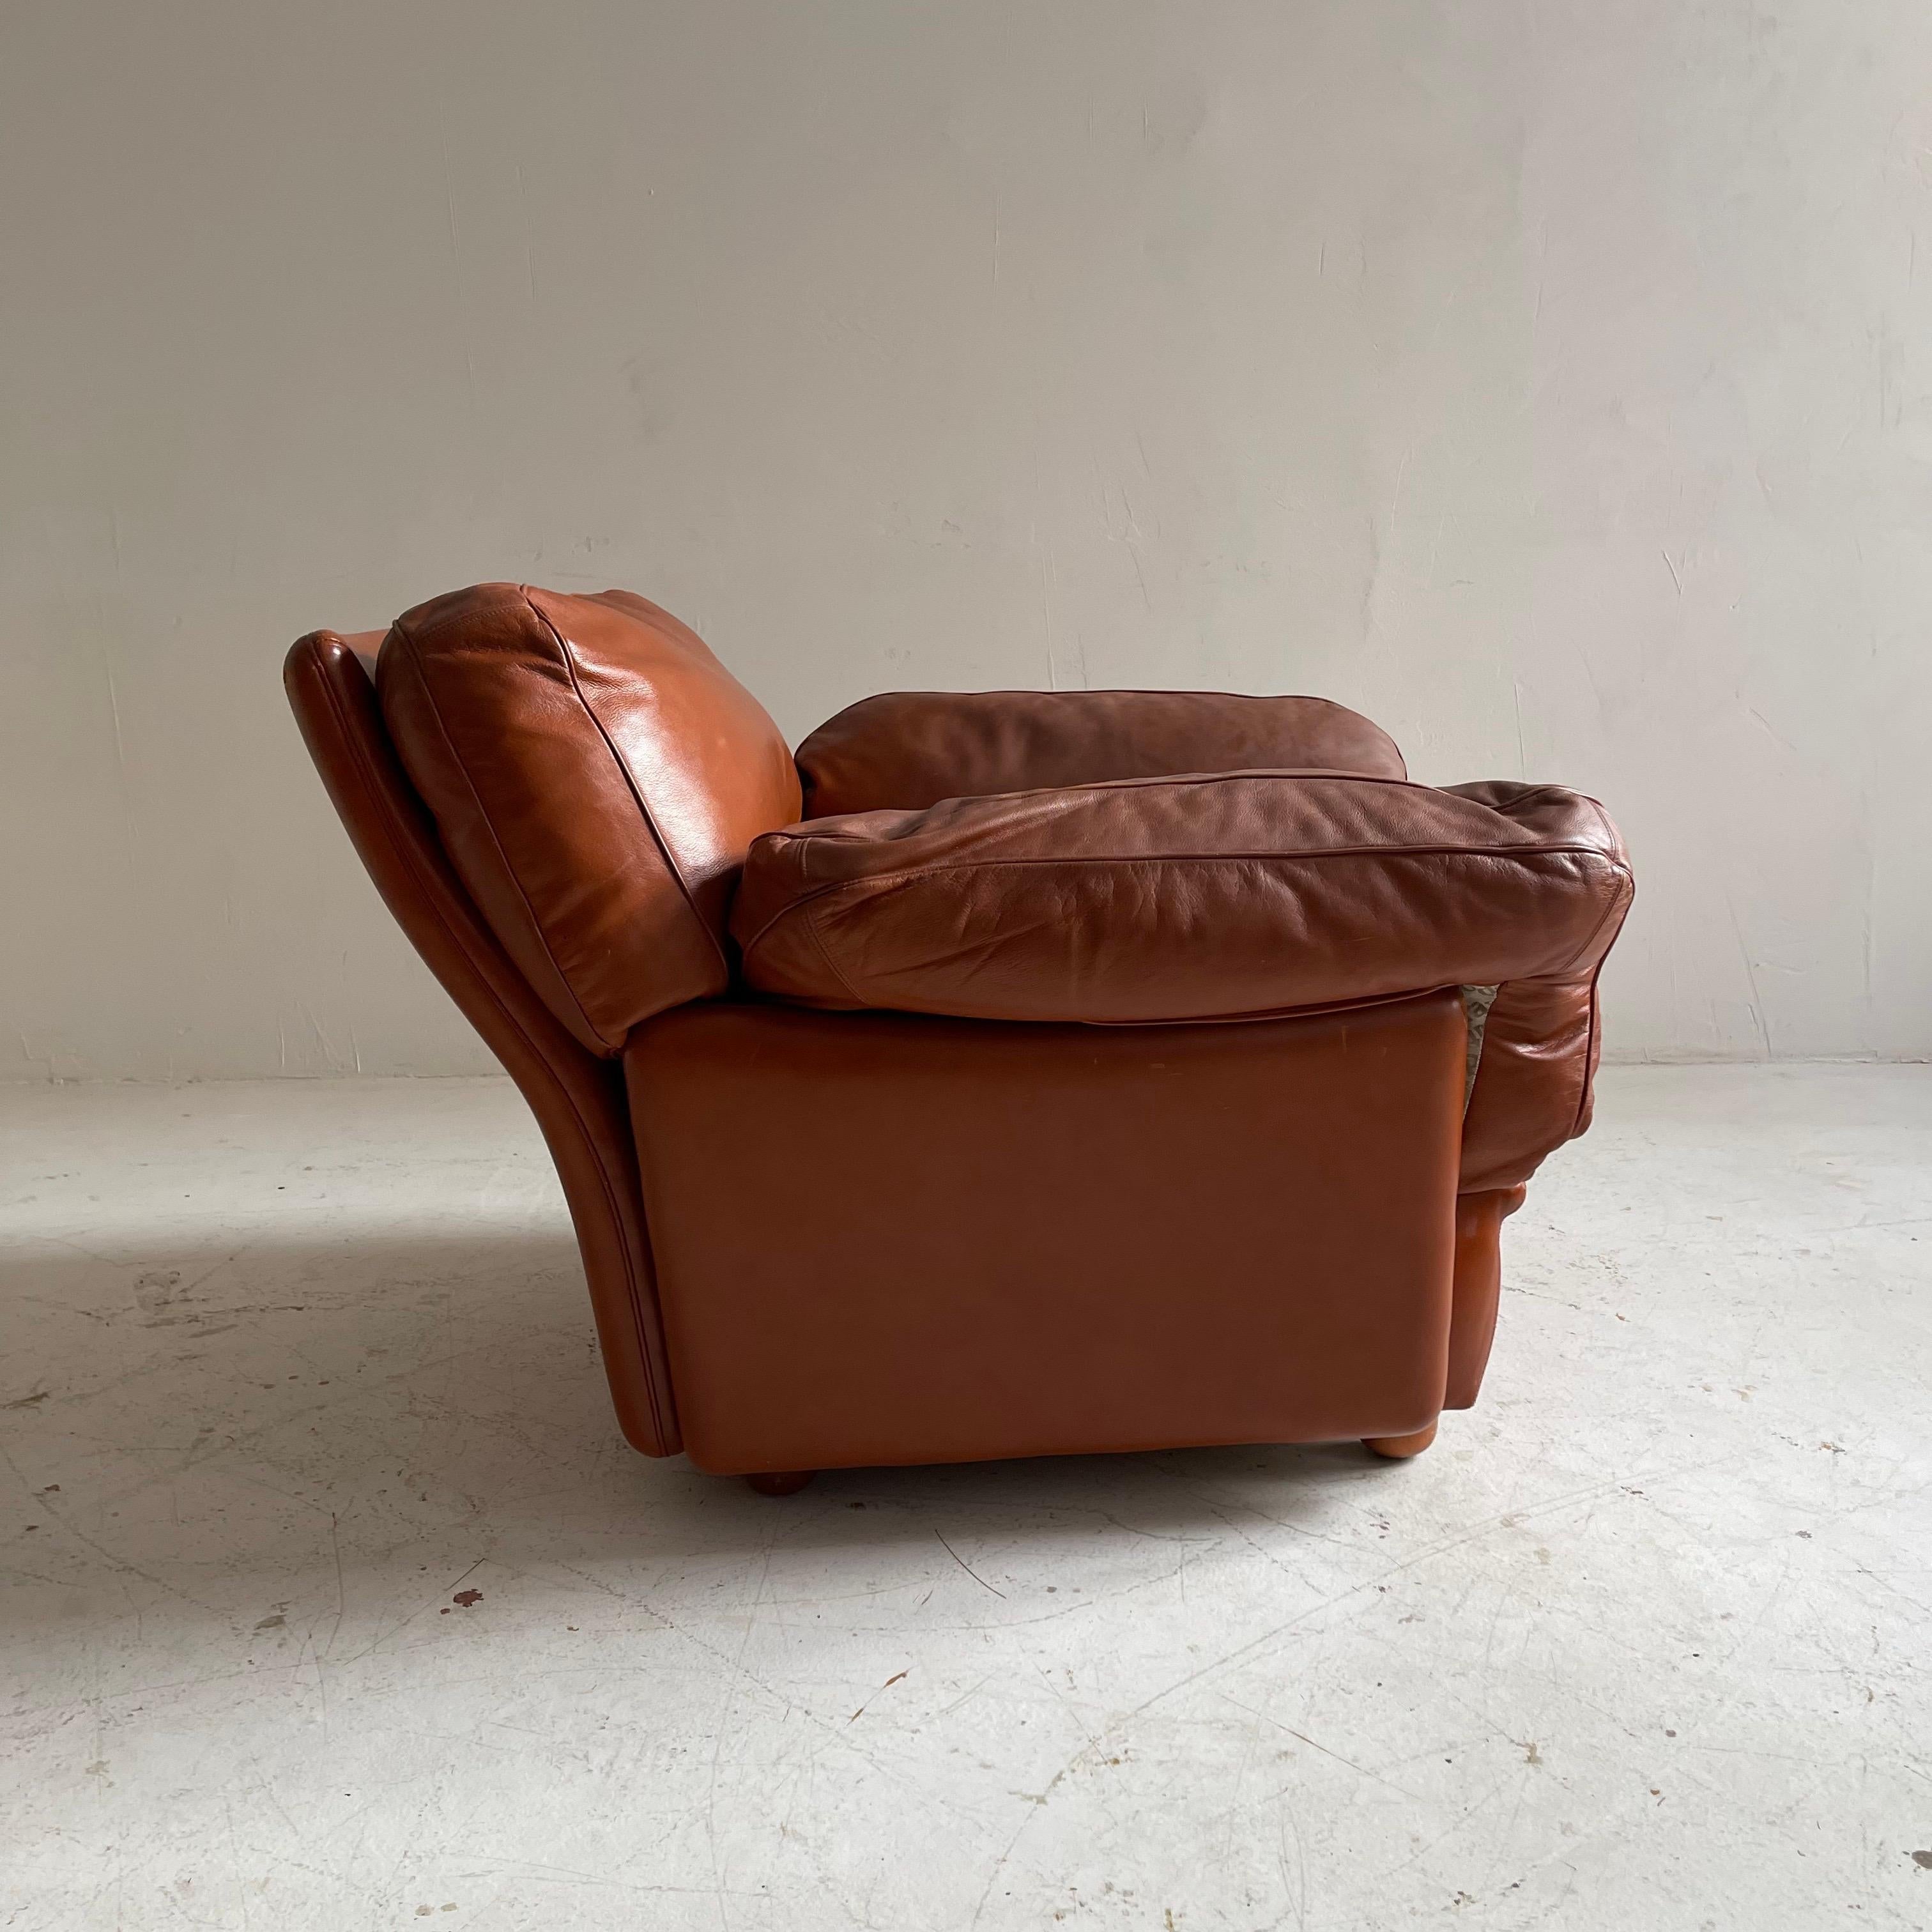 Tito Agnoli Cognac Leather Sofa Suite Model 'Poppy' Poltrona Frau, Italy 1970s For Sale 5